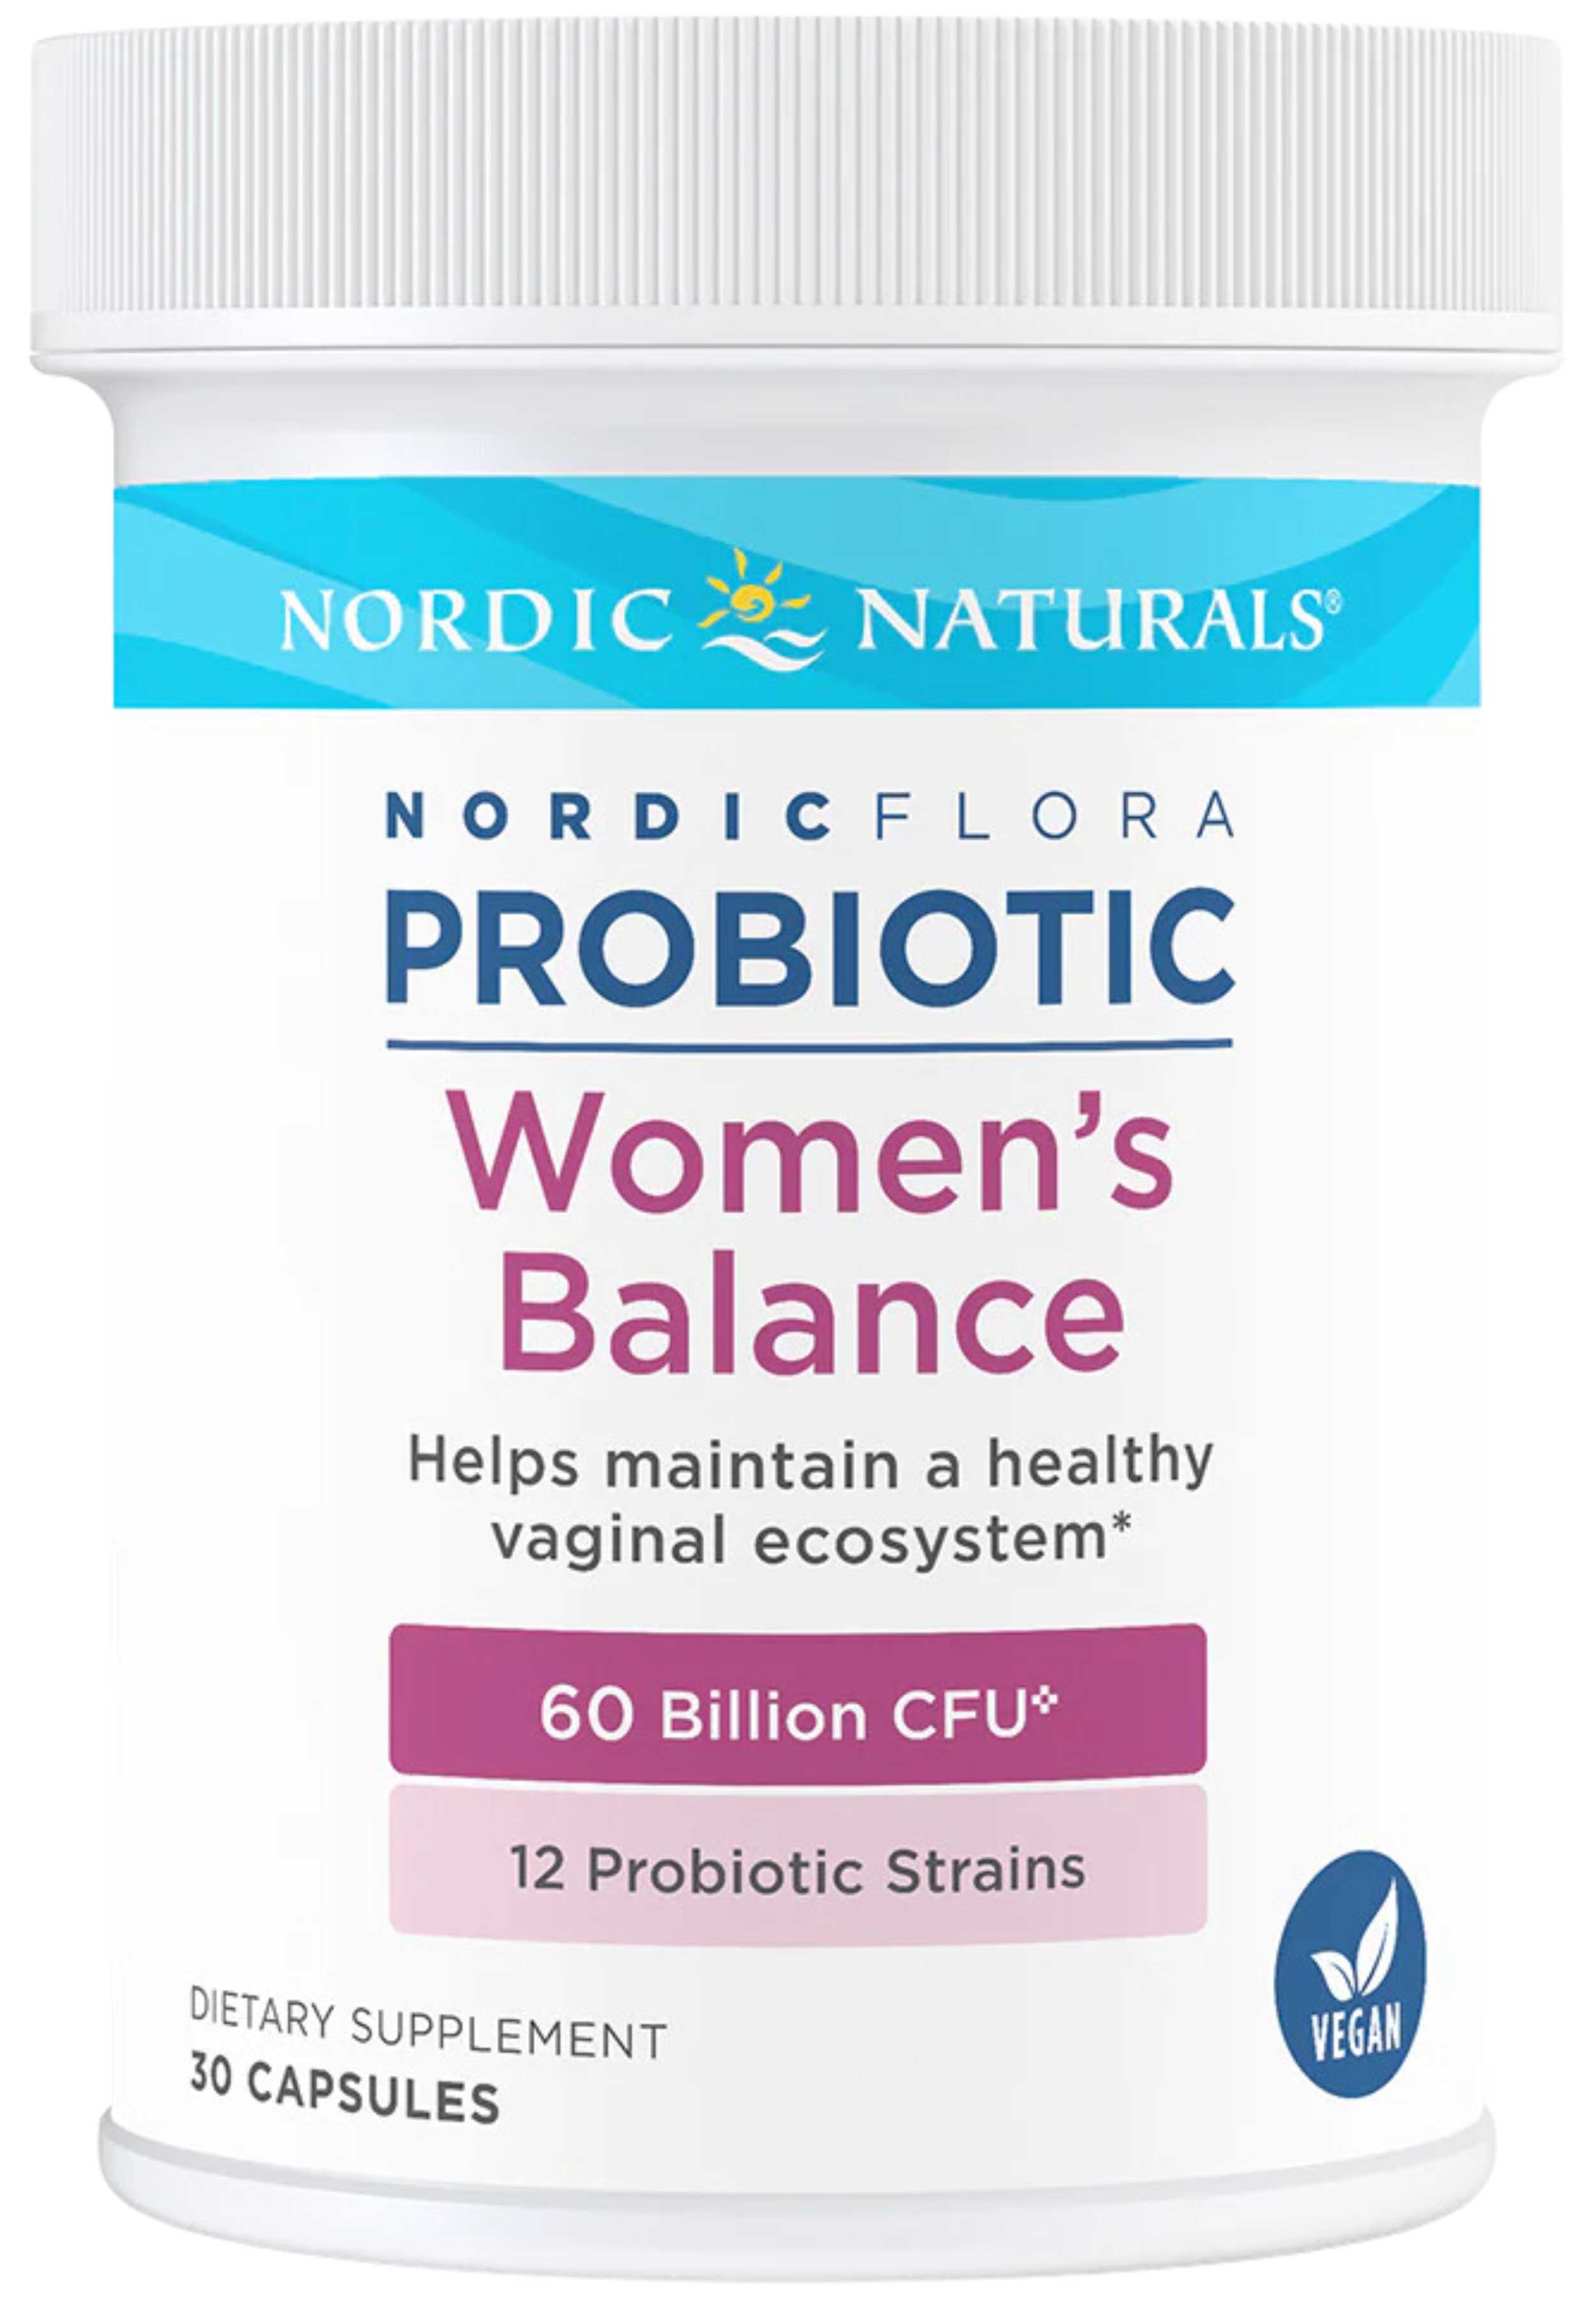 Nordic Naturals Nordic Flora Probiotic Women’s Balance